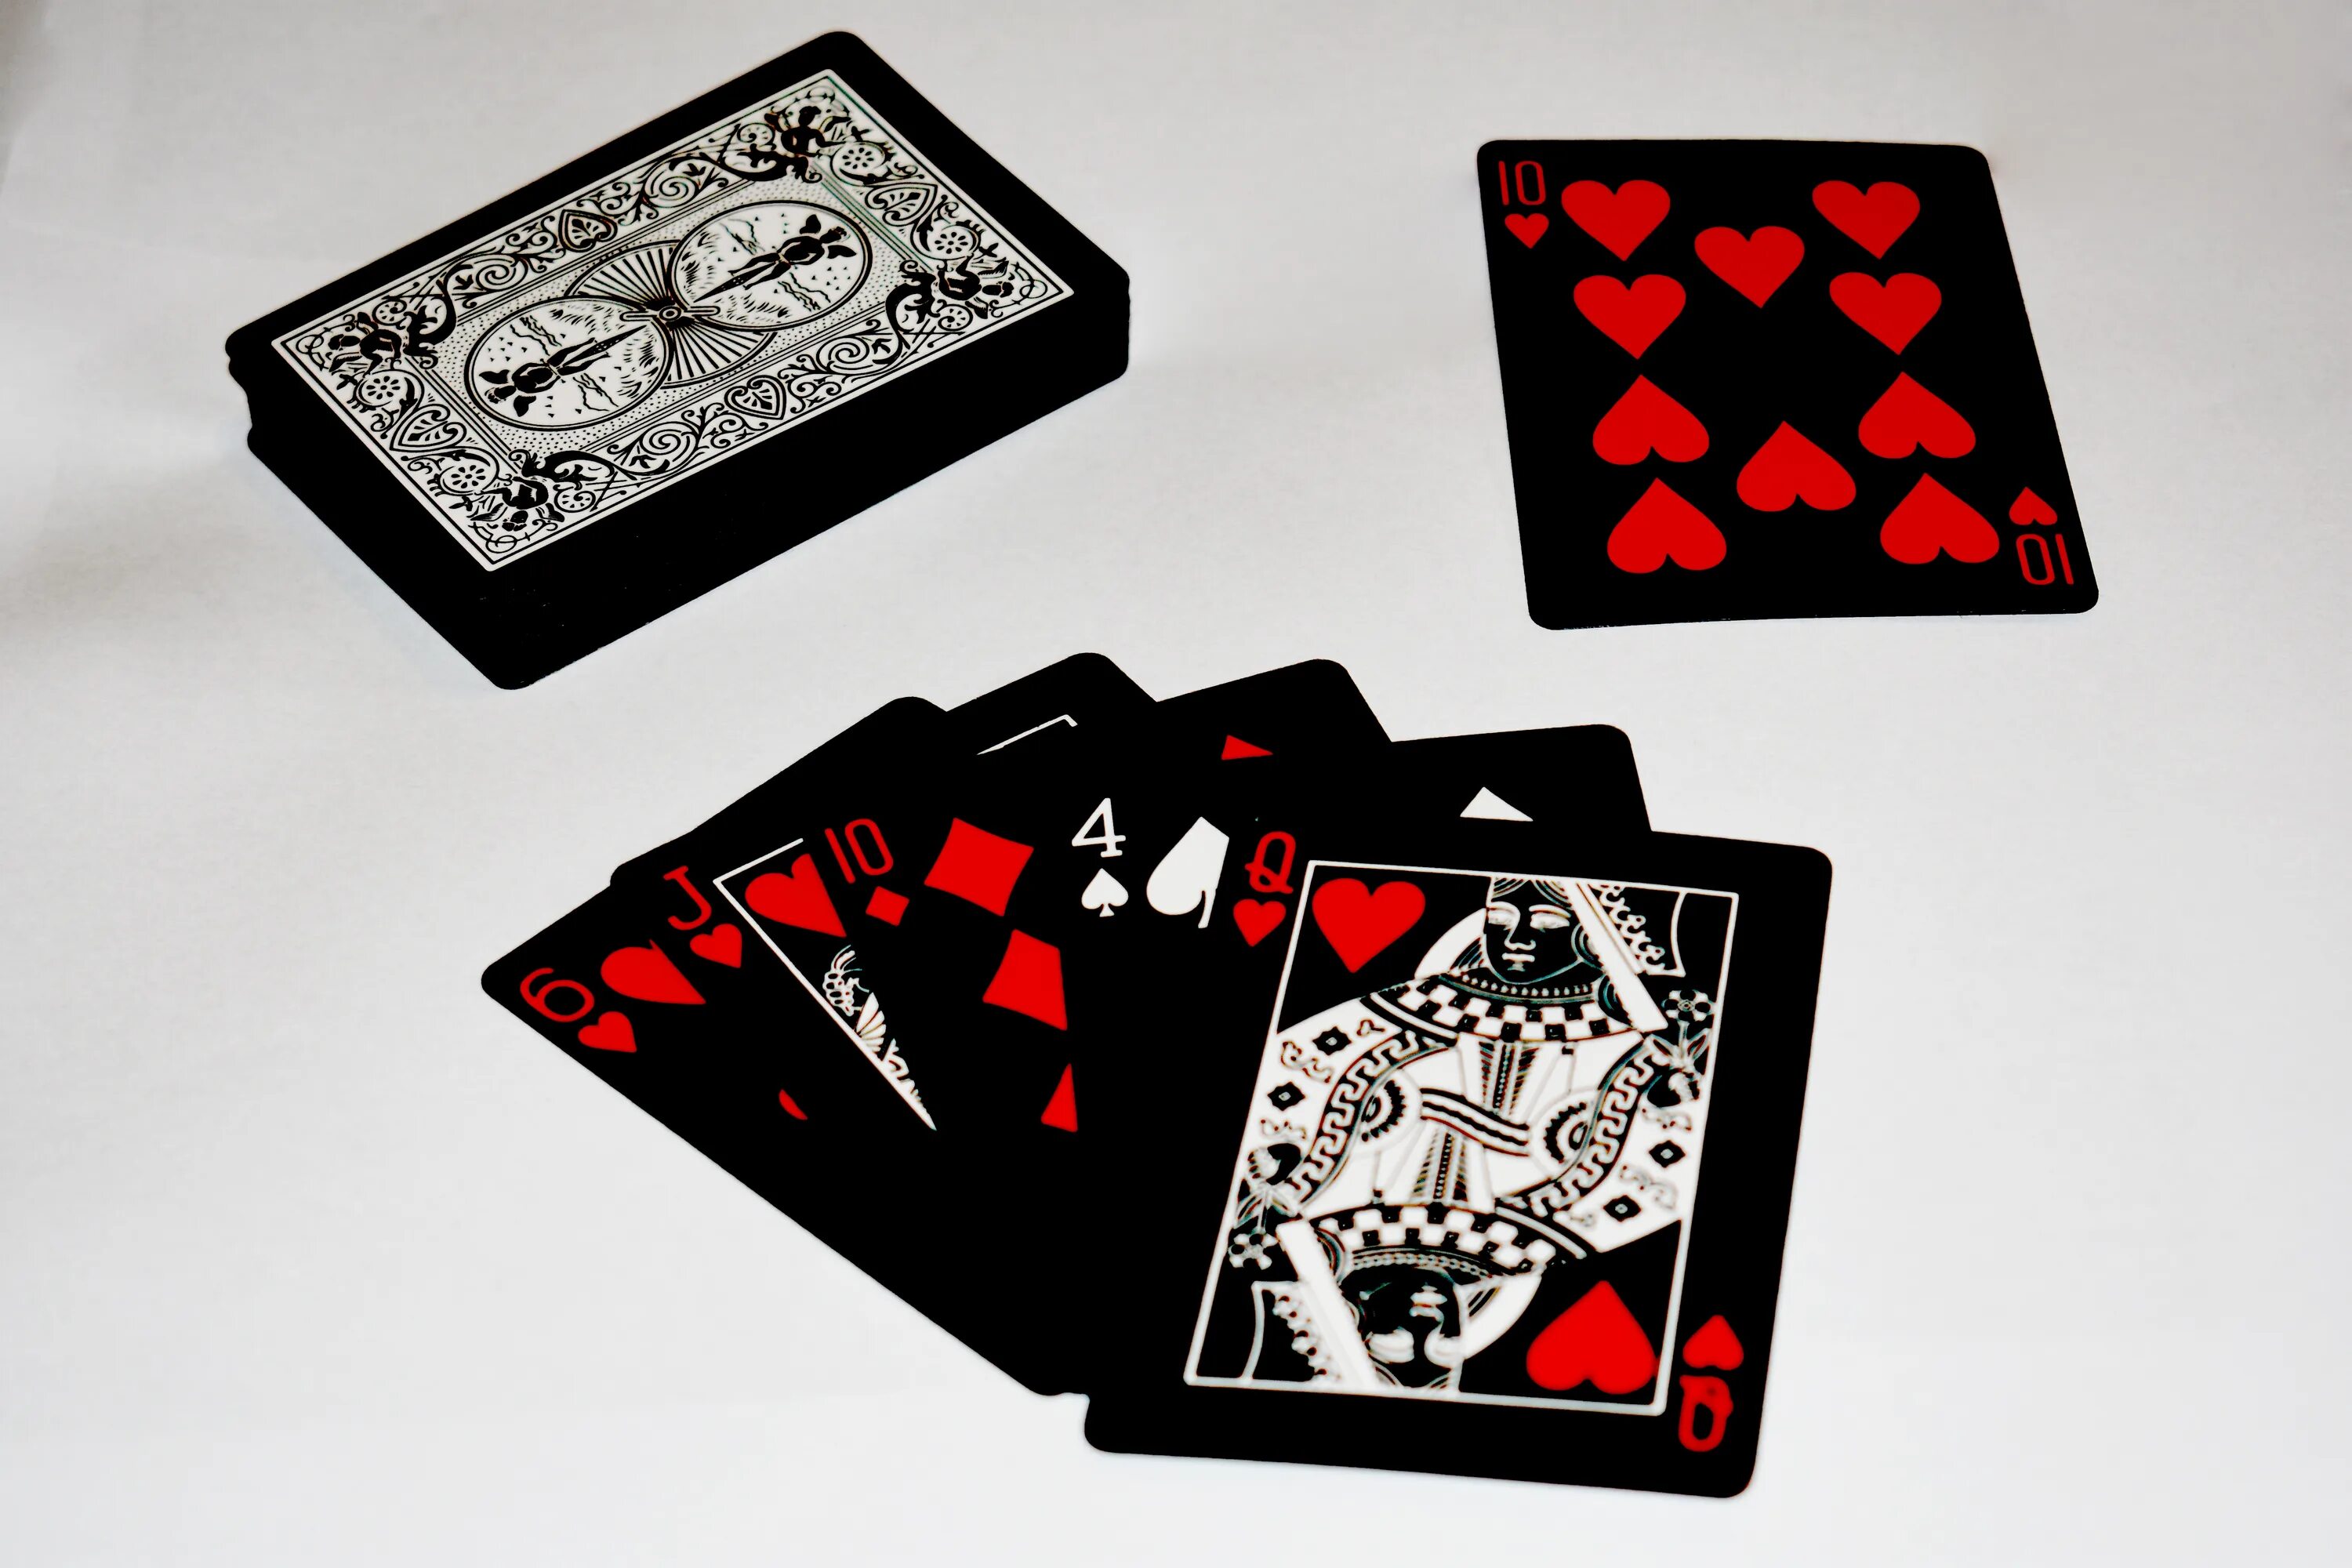 Cards images. Игральные карты. Красивые игральные карты. Колода игральных карт. Покерные карты.